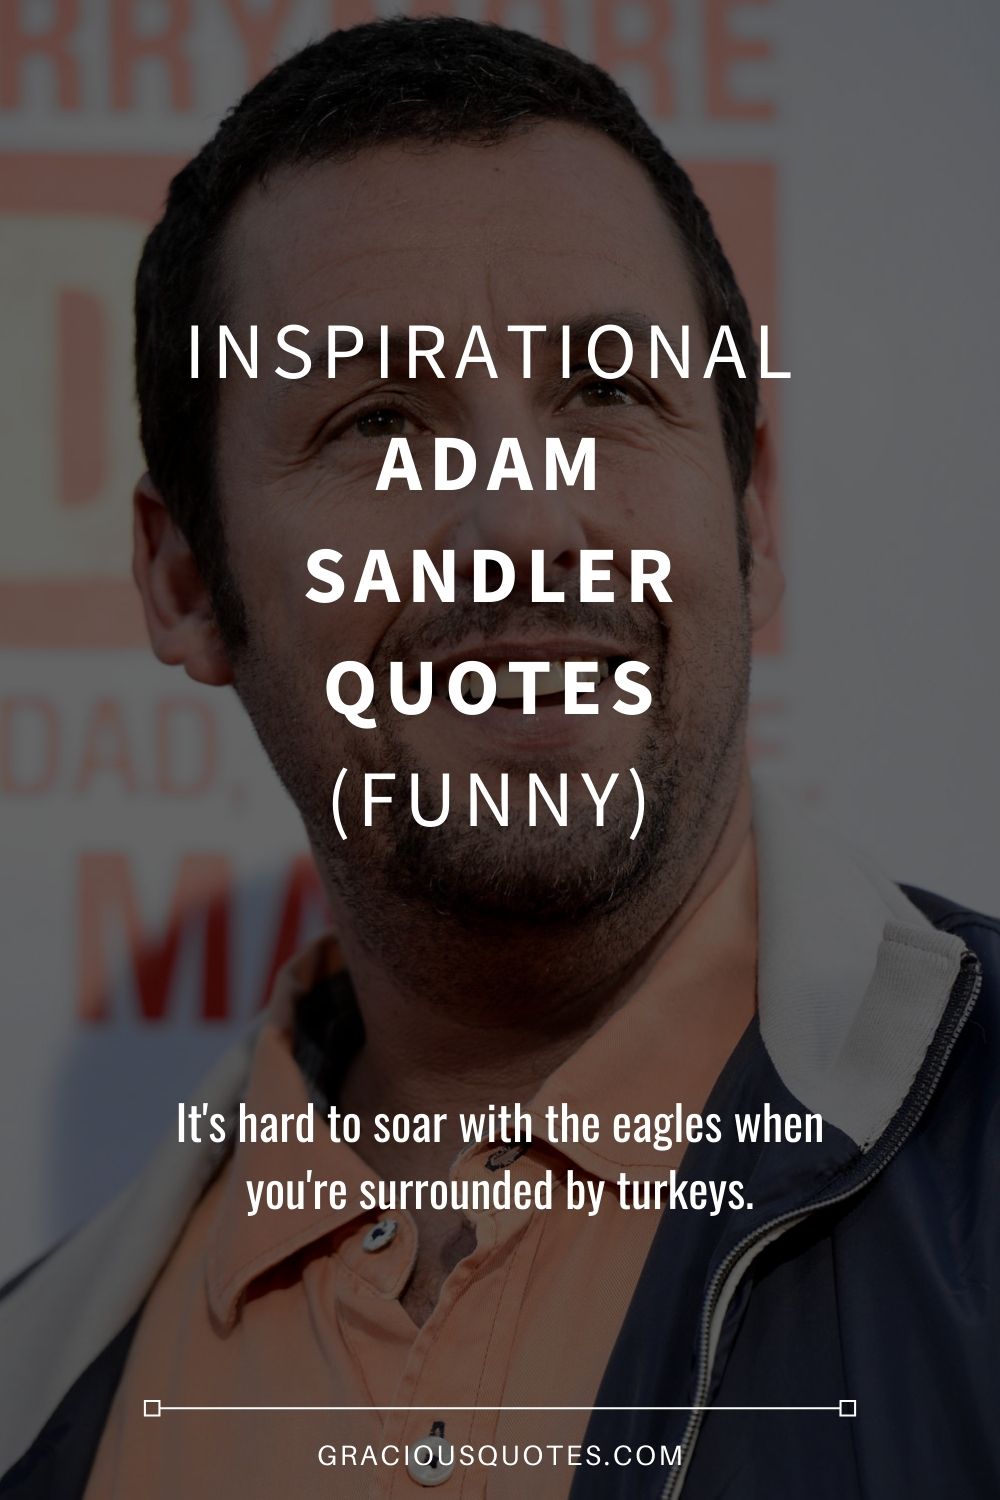 Inspirational Adam Sandler Quotes (FUNNY) - Gracious Quotes